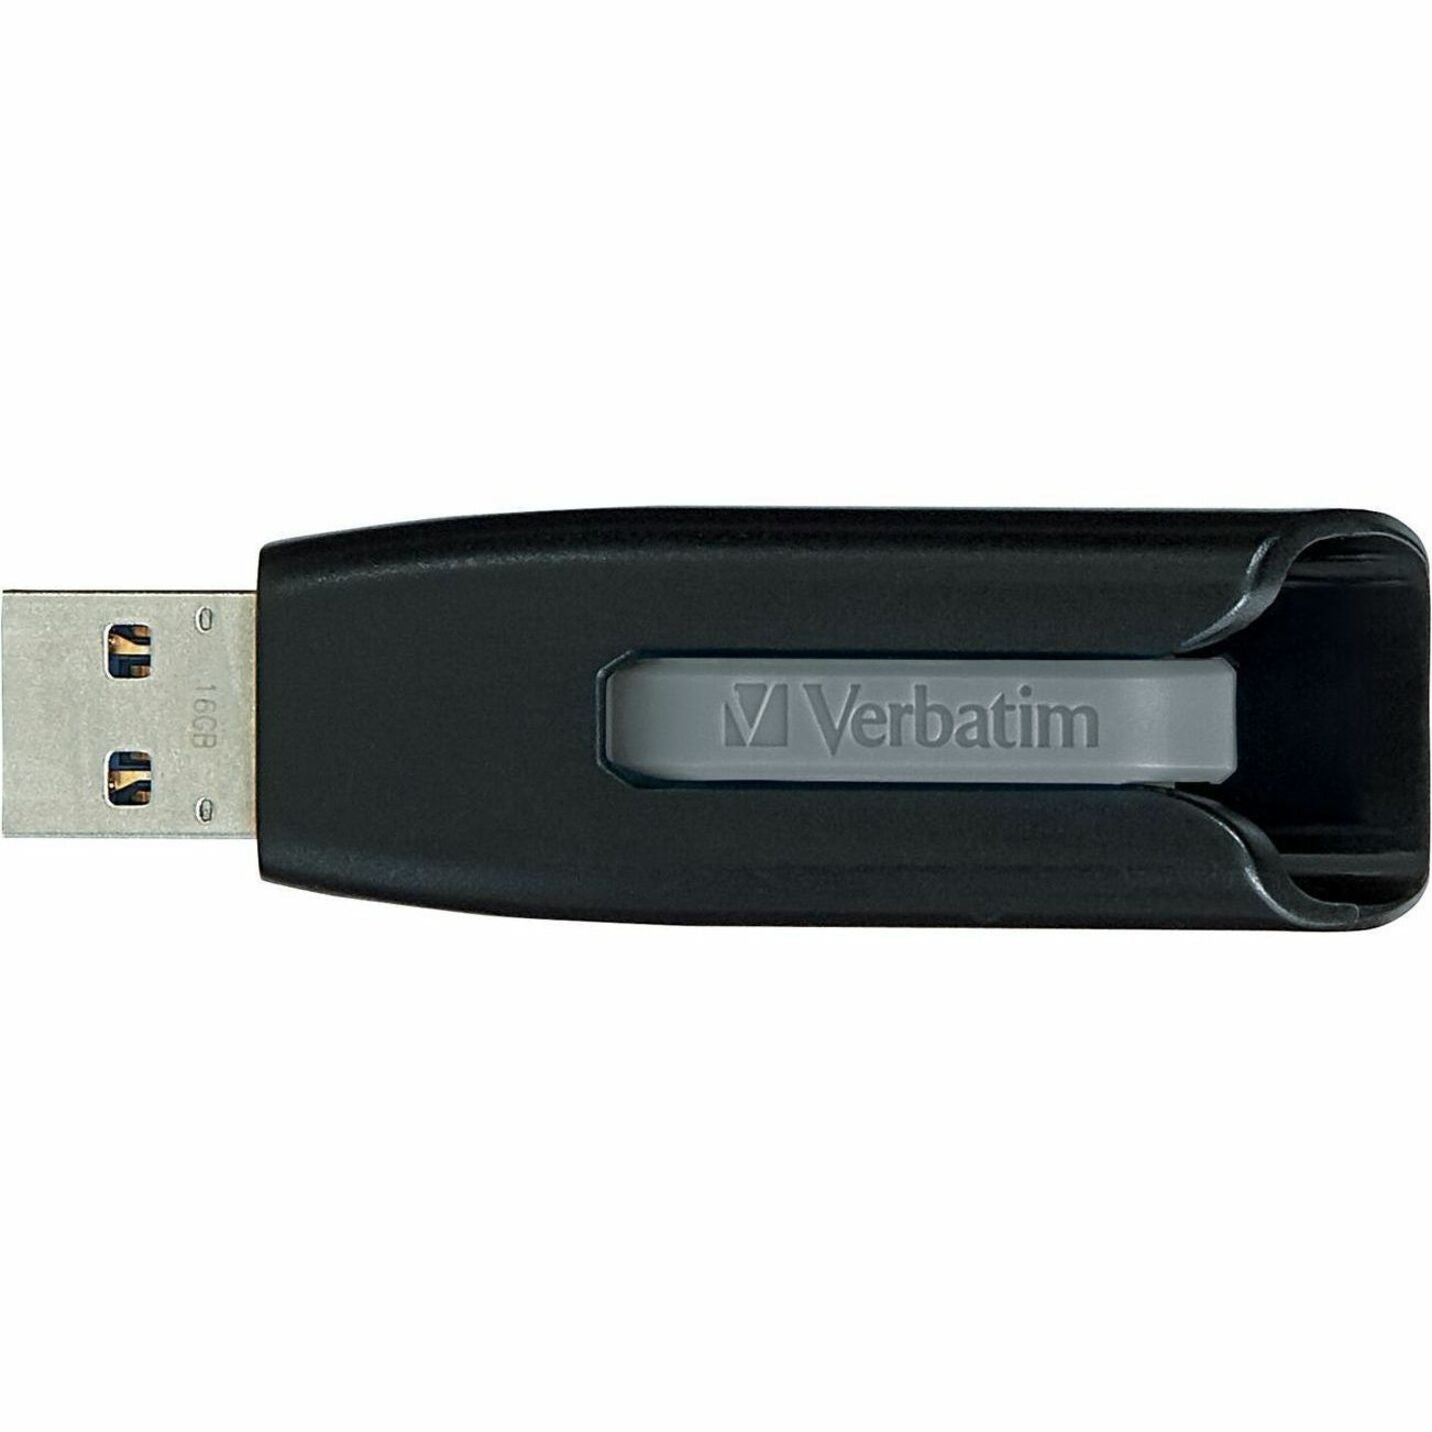 Microban 49172 Store 'n' Go V3 USB Drive, 16GB, Gray